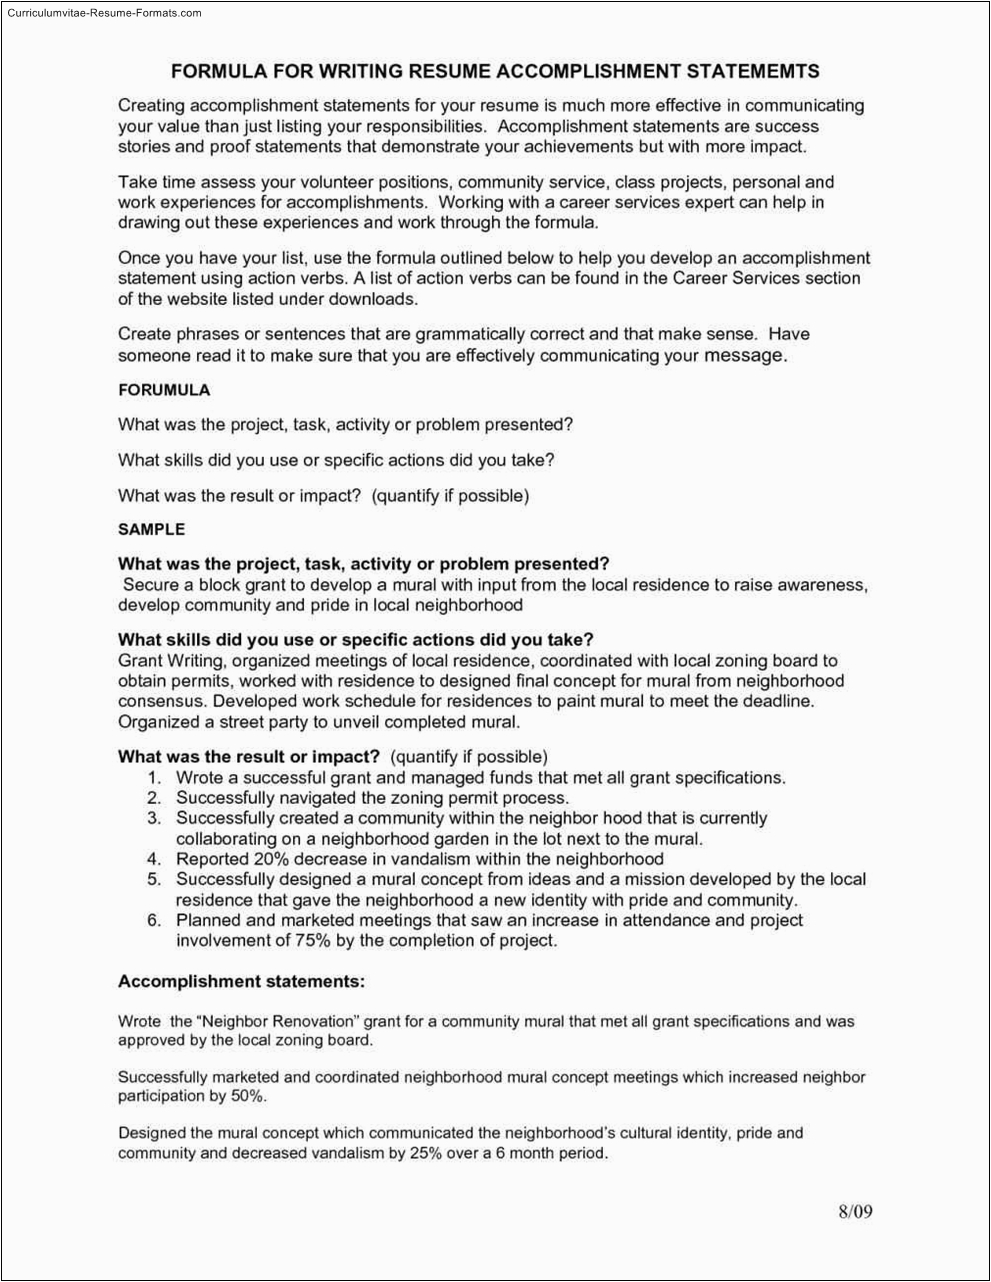 Sample List Of Accomplishments for Resume Ac Plishment Resume Template